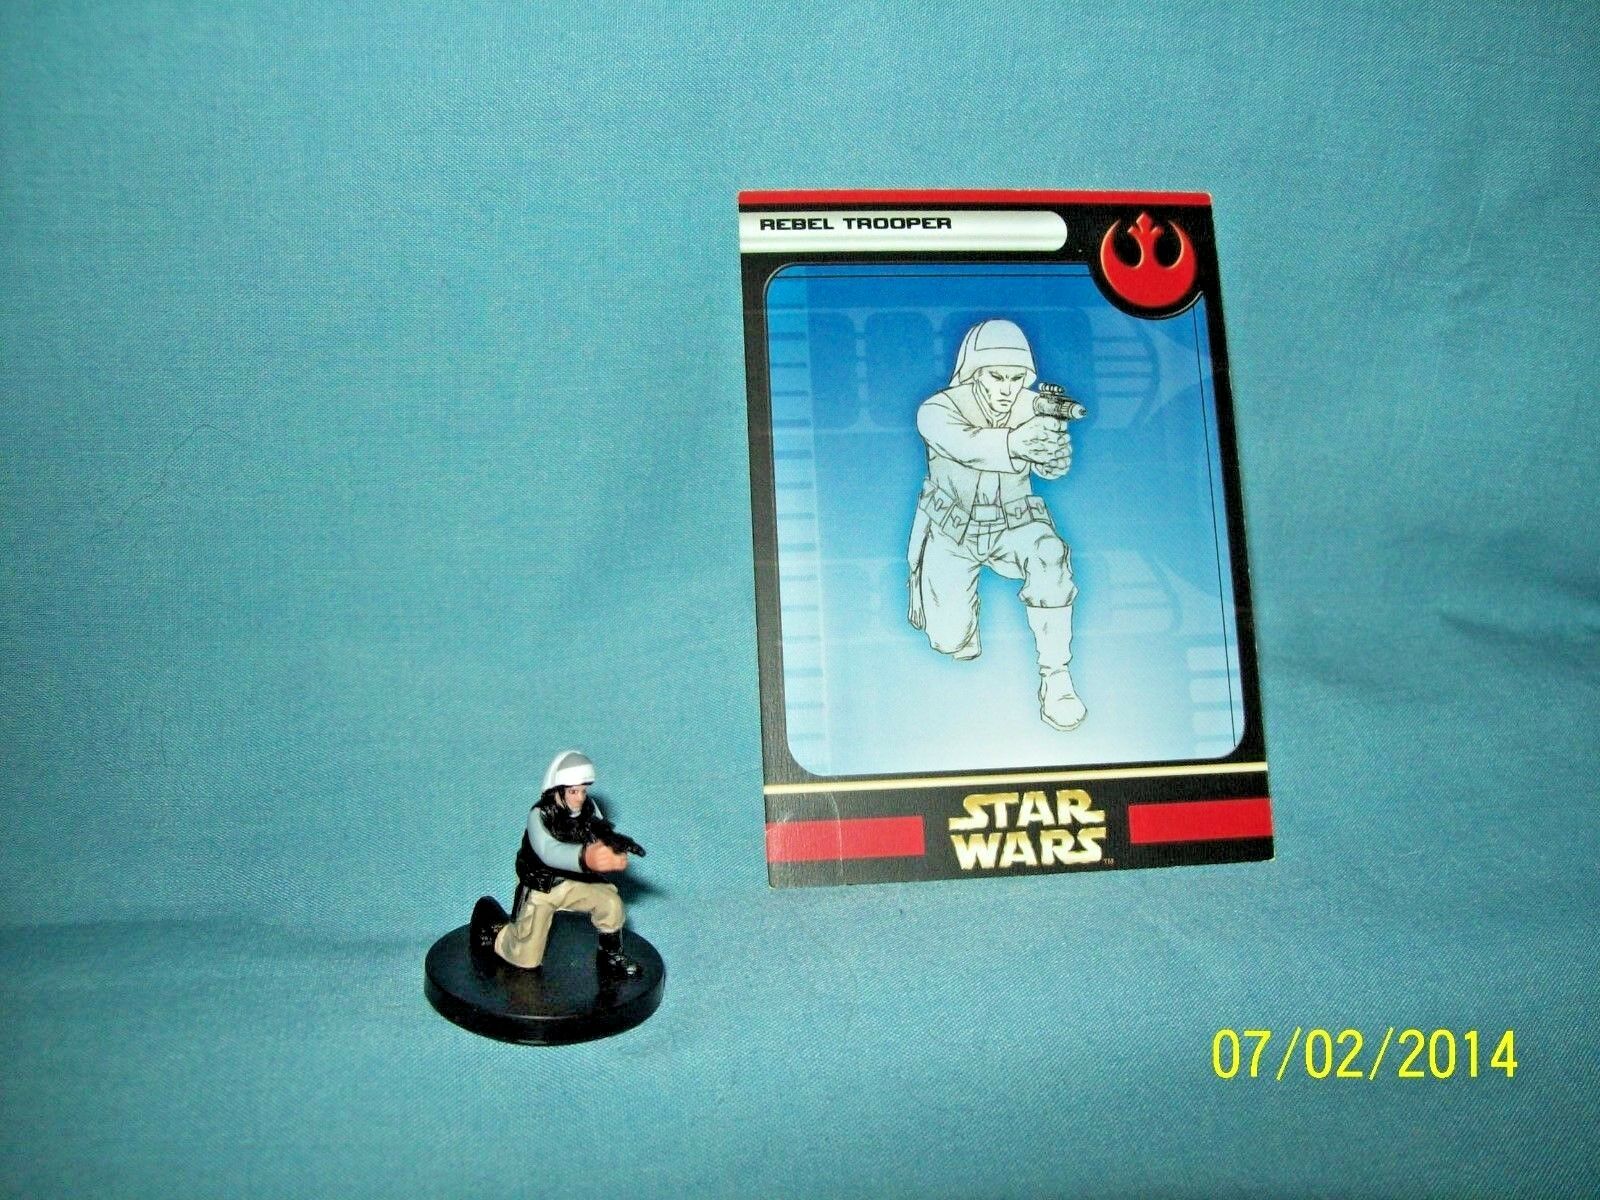 Wotc Star Wars Miniatures Rebel Trooper, Rebel Storm 18/60, Rebel, Common